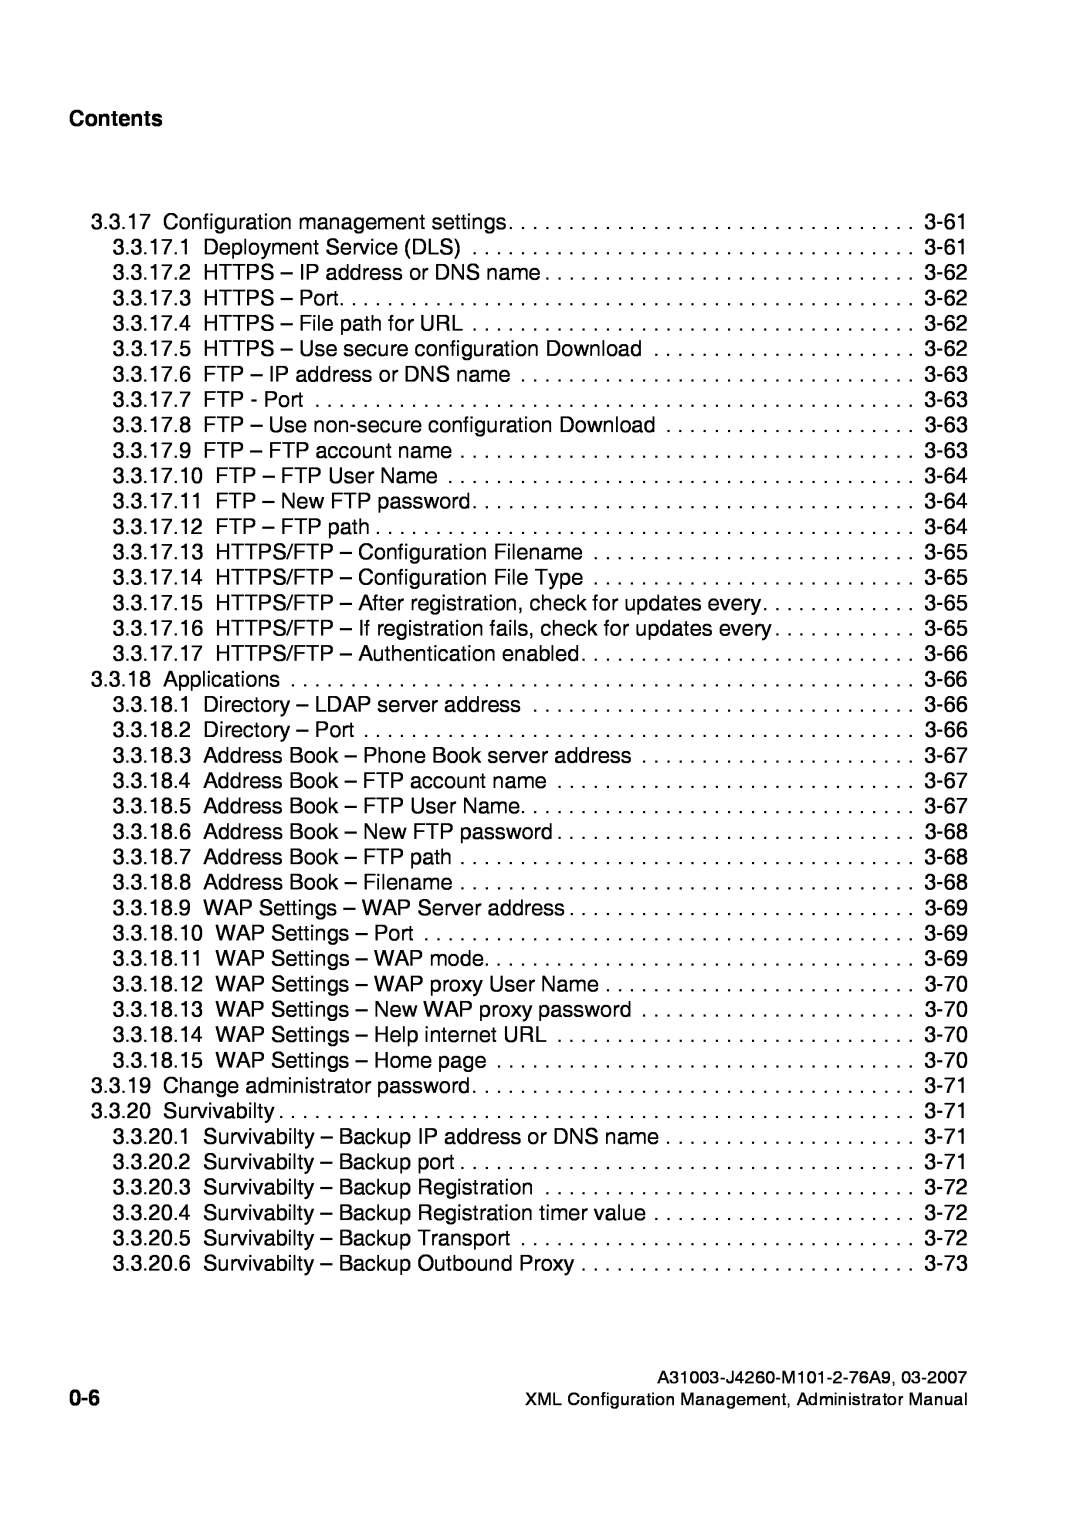 Siemens 420 S V6.0, 410 S V6.0 manual Contents 